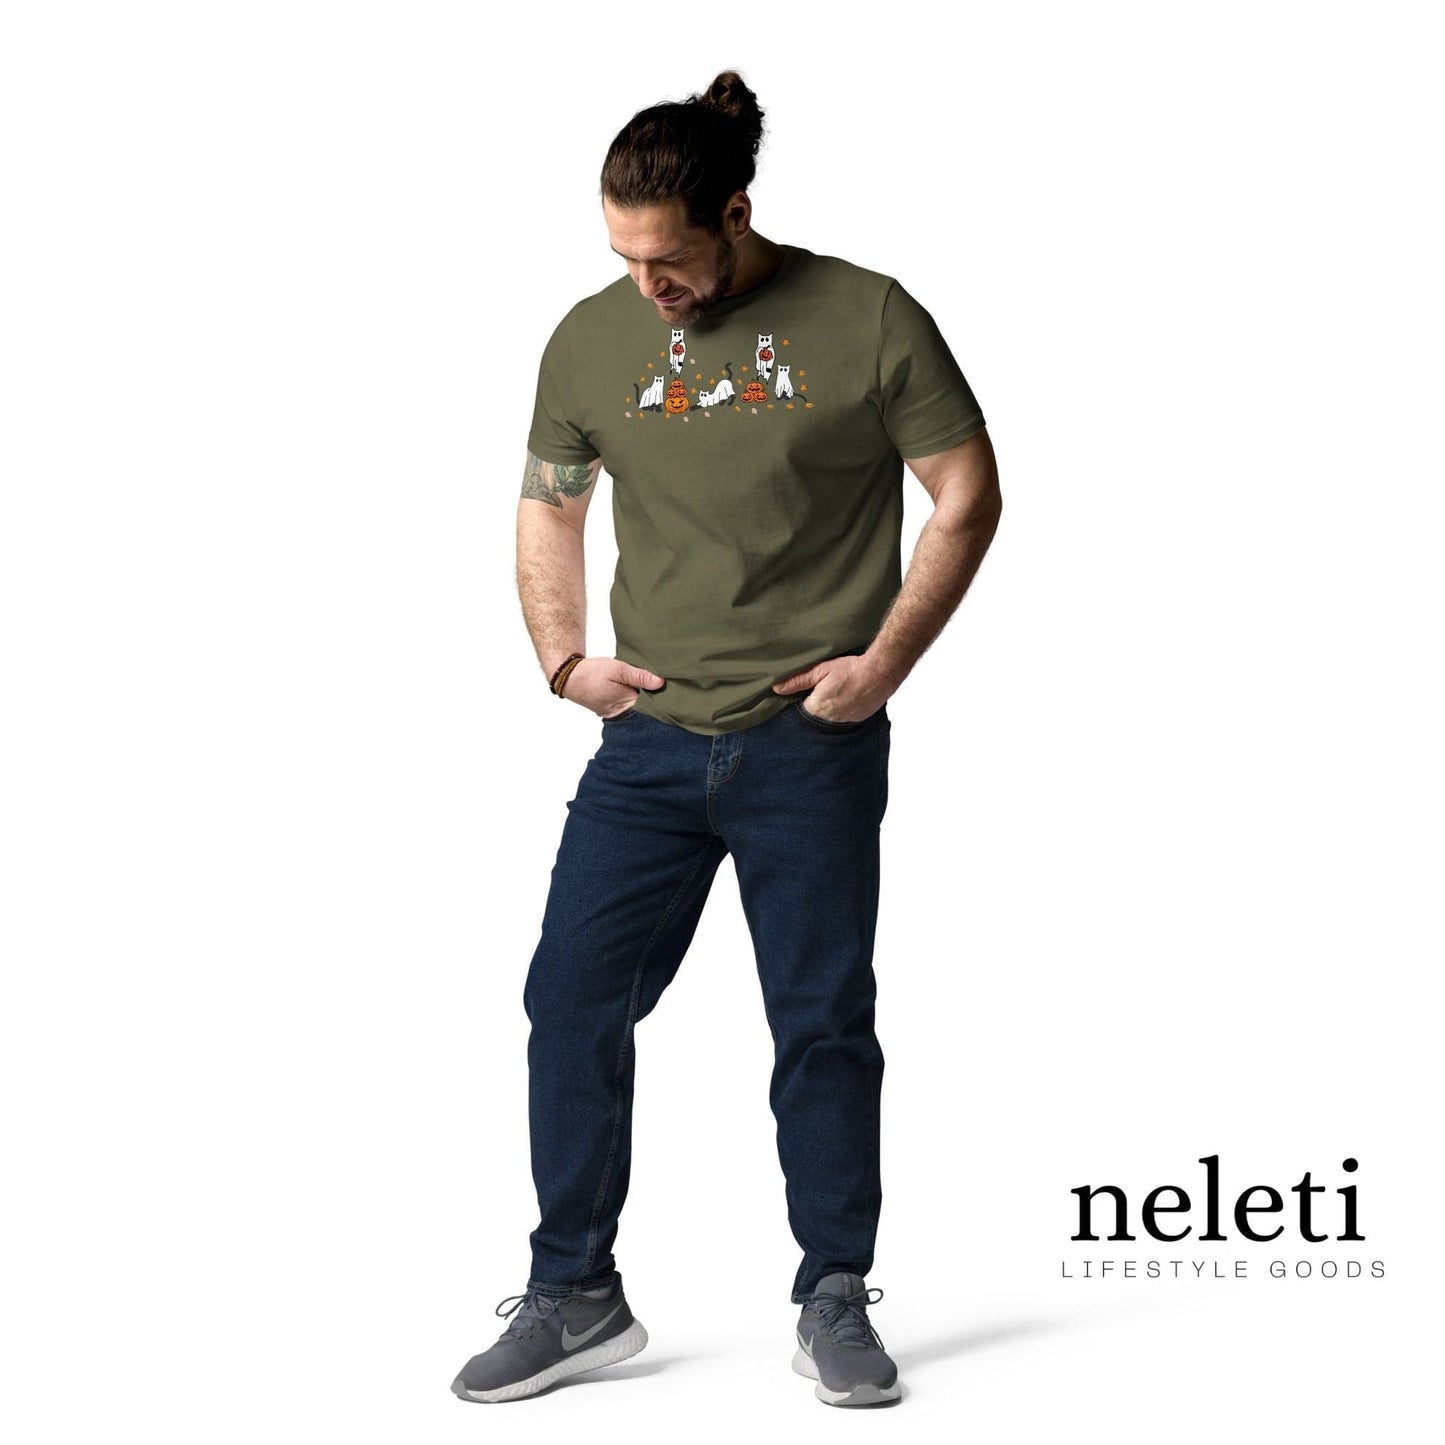 neleti.com-halloween-khaki-shirt-for-cat-lover